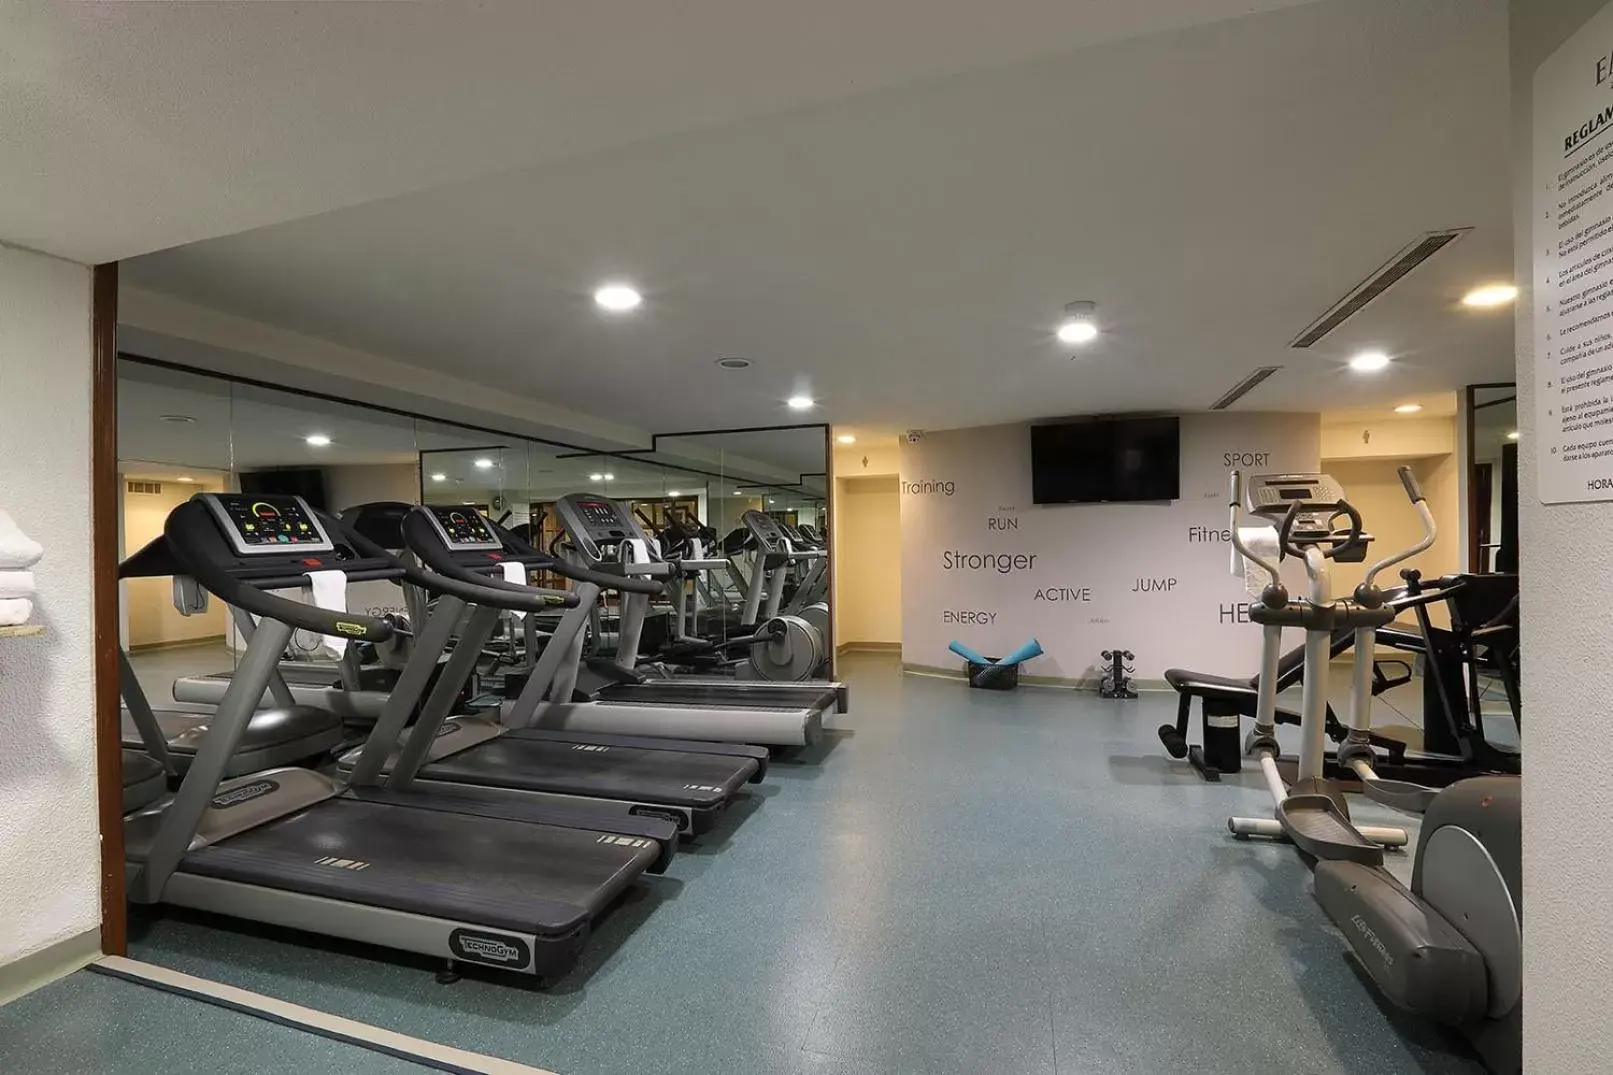 Fitness centre/facilities, Fitness Center/Facilities in Emporio Zacatecas